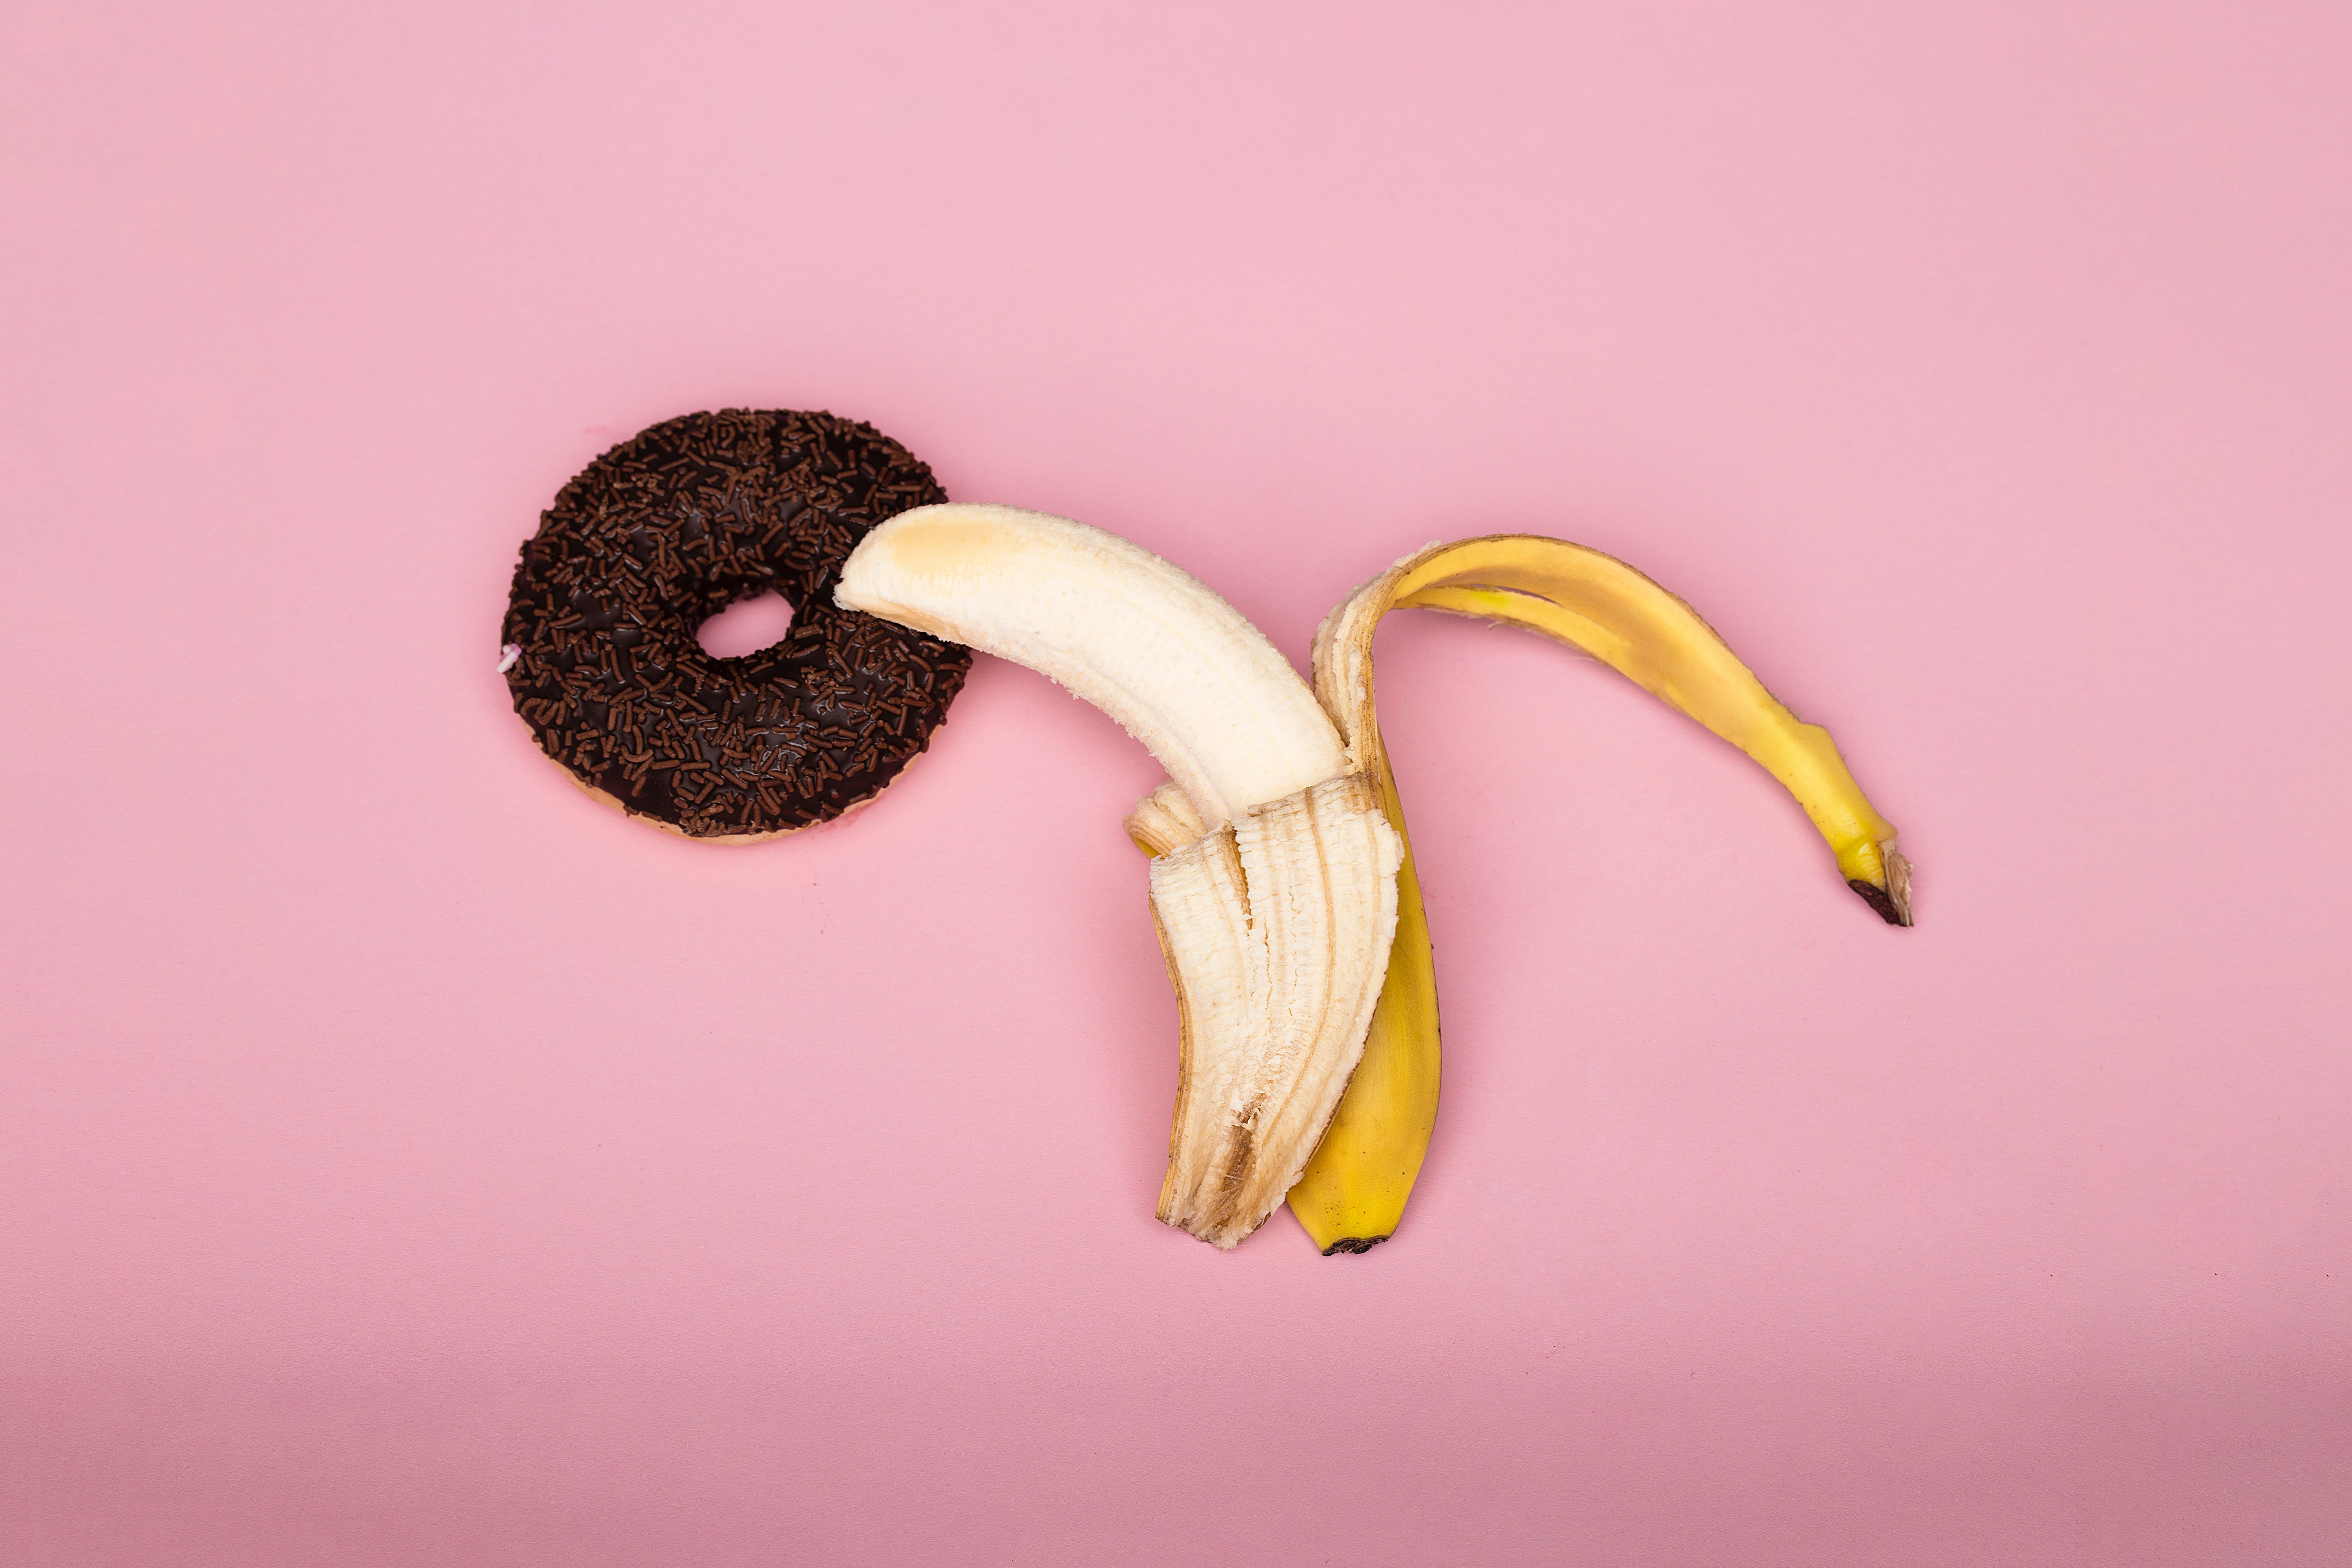 Banana and donut